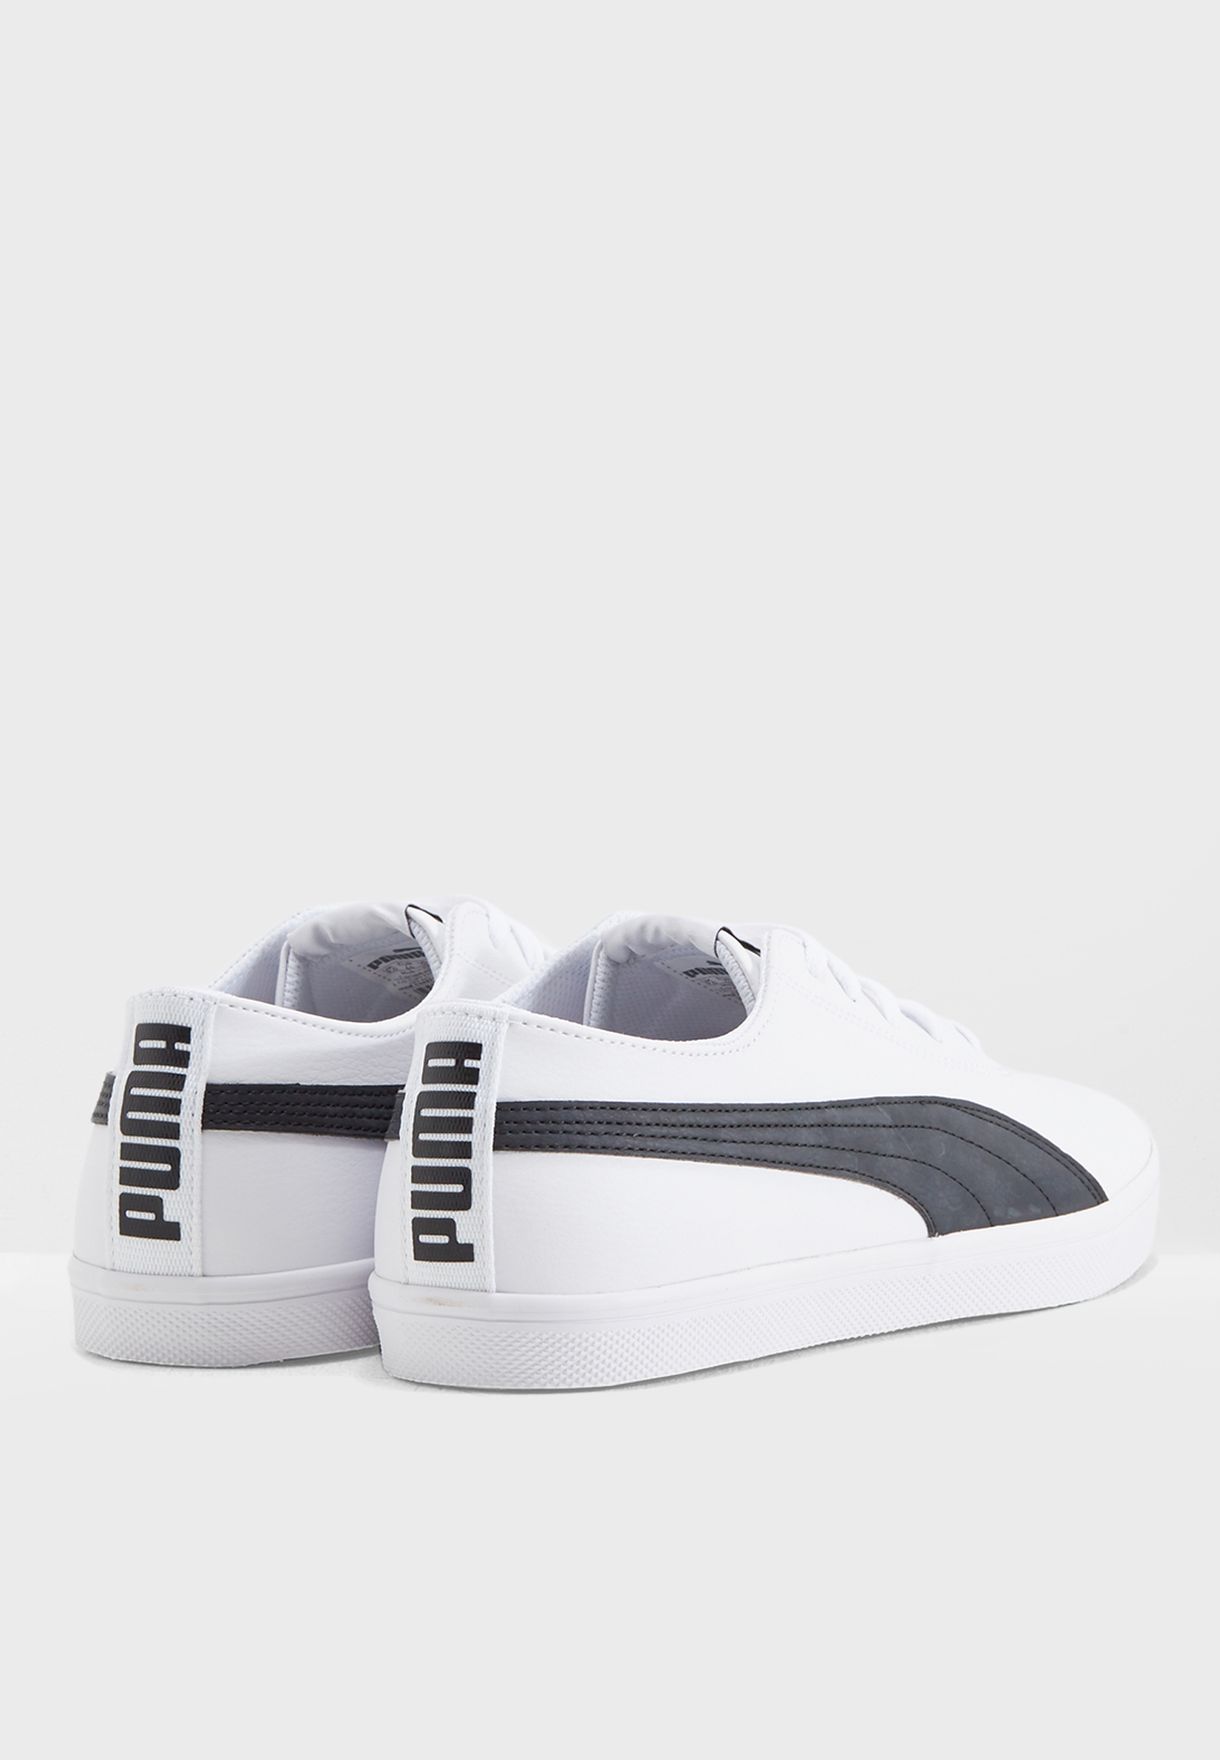 puma men white urban sneakers